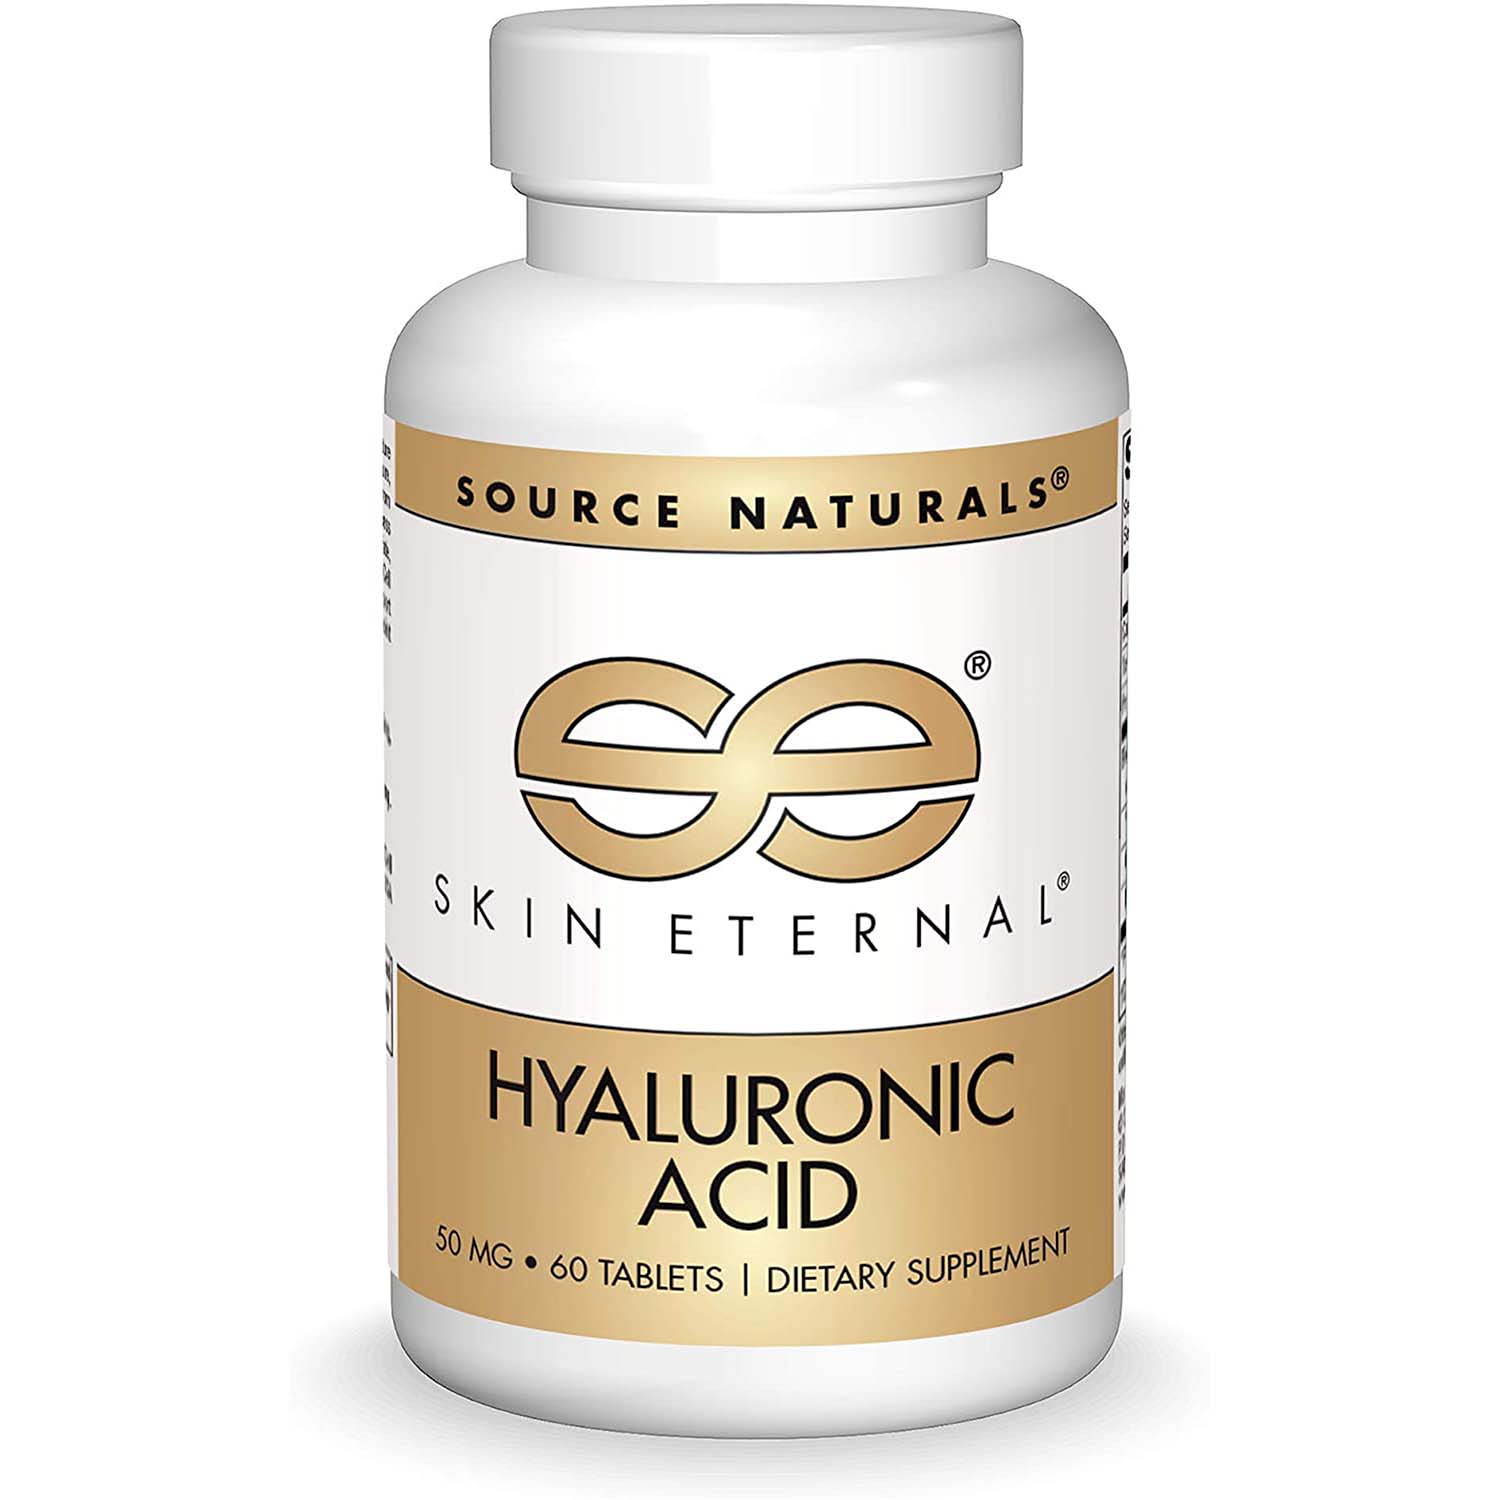 Source Naturals Skin Eternal Hyaluronic Acid 60 Tablets 50 mg